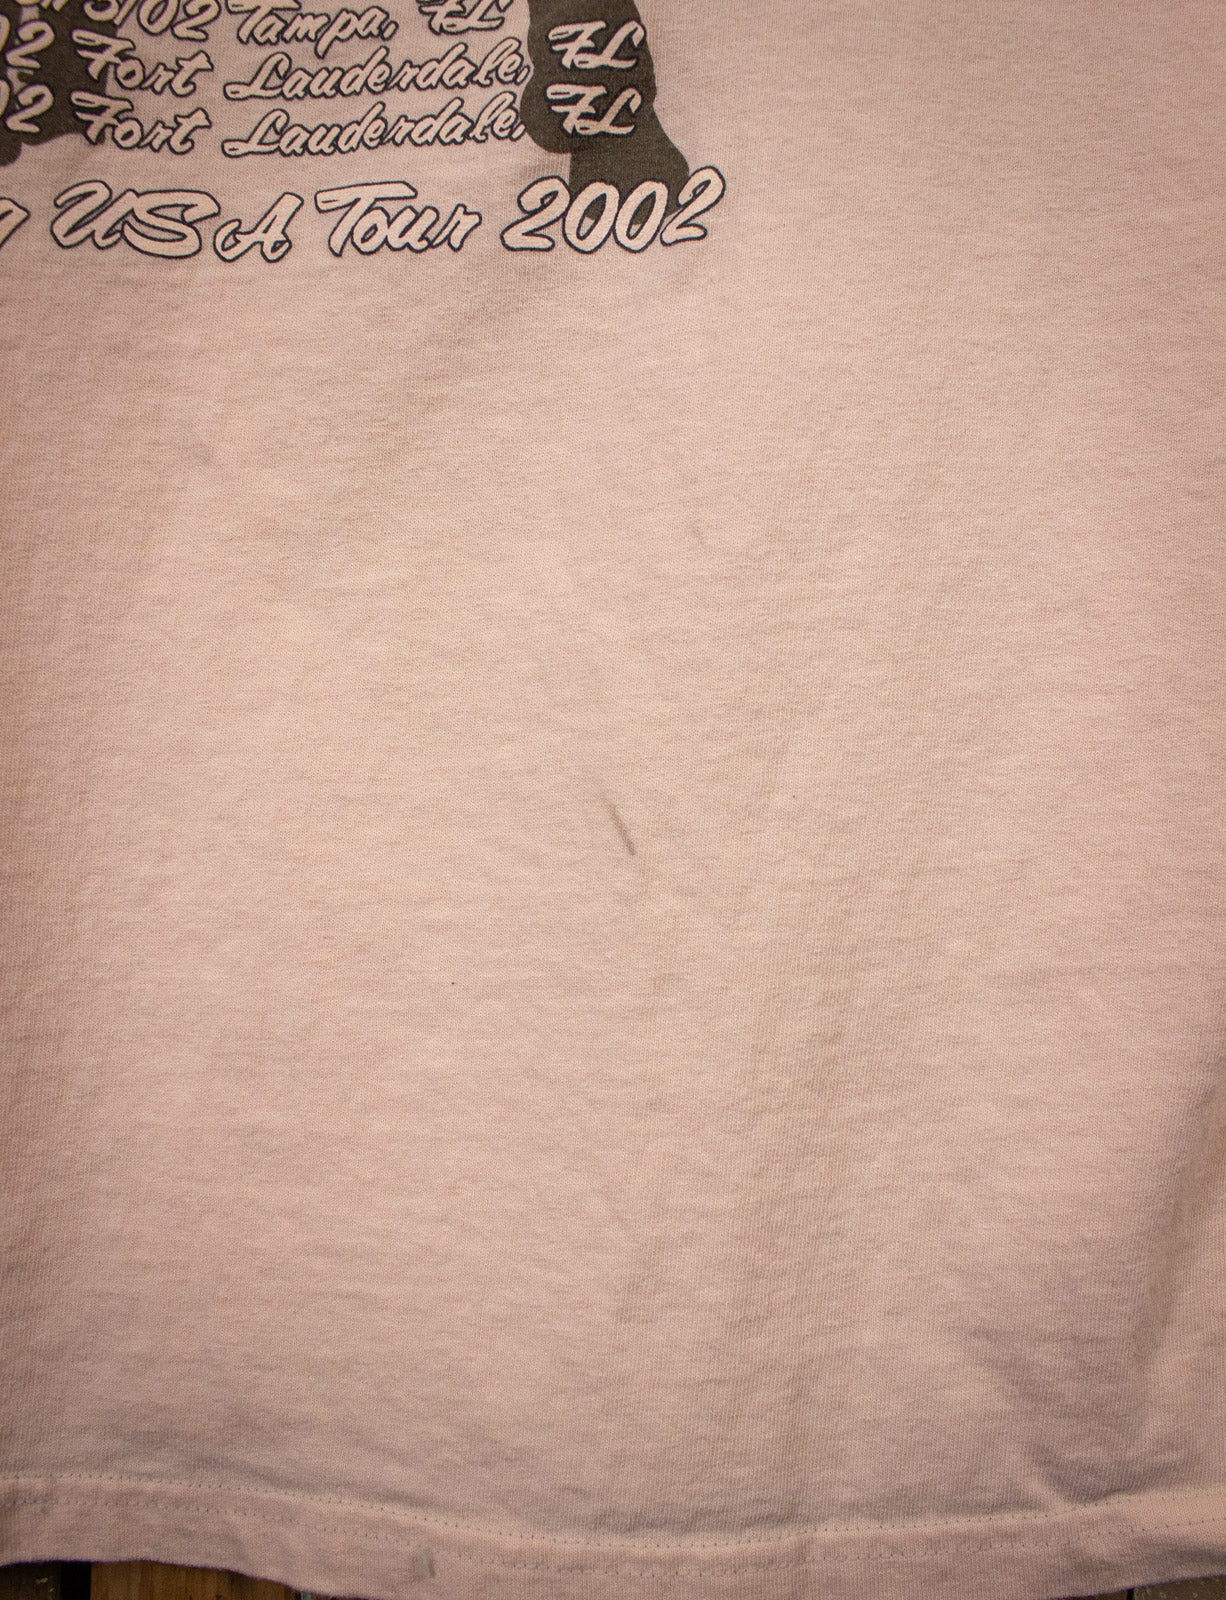 Vintage Paul McCartney Driving Rain Concert T Shirt 2002 Pink XL